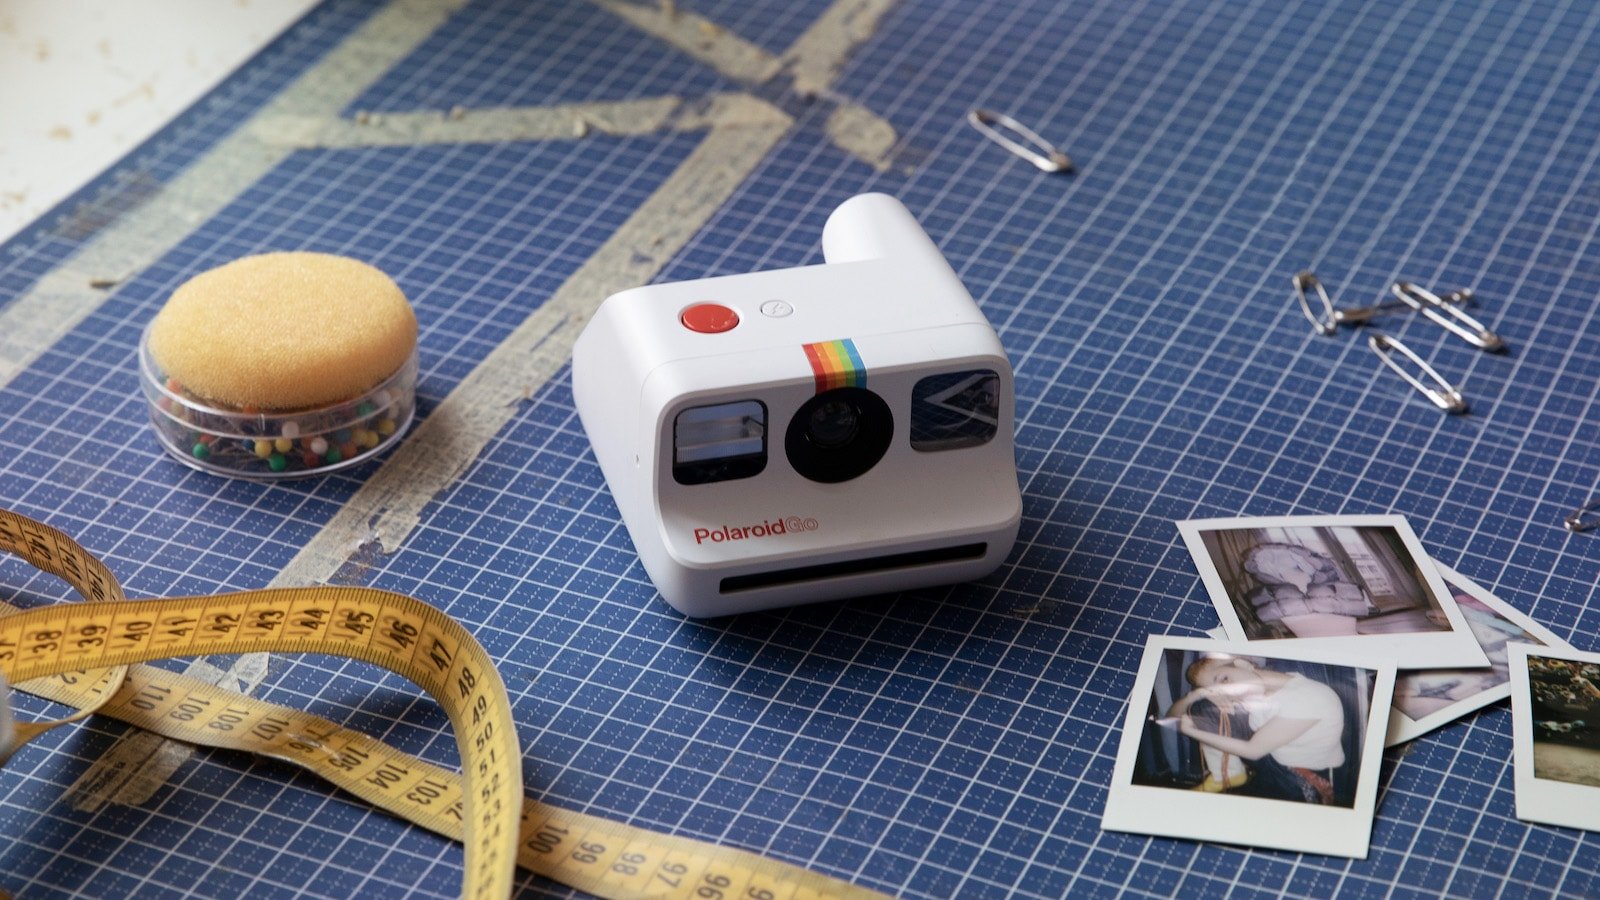 Polaroid Go pocket-size instant analog camera has a self-timer and adorable design